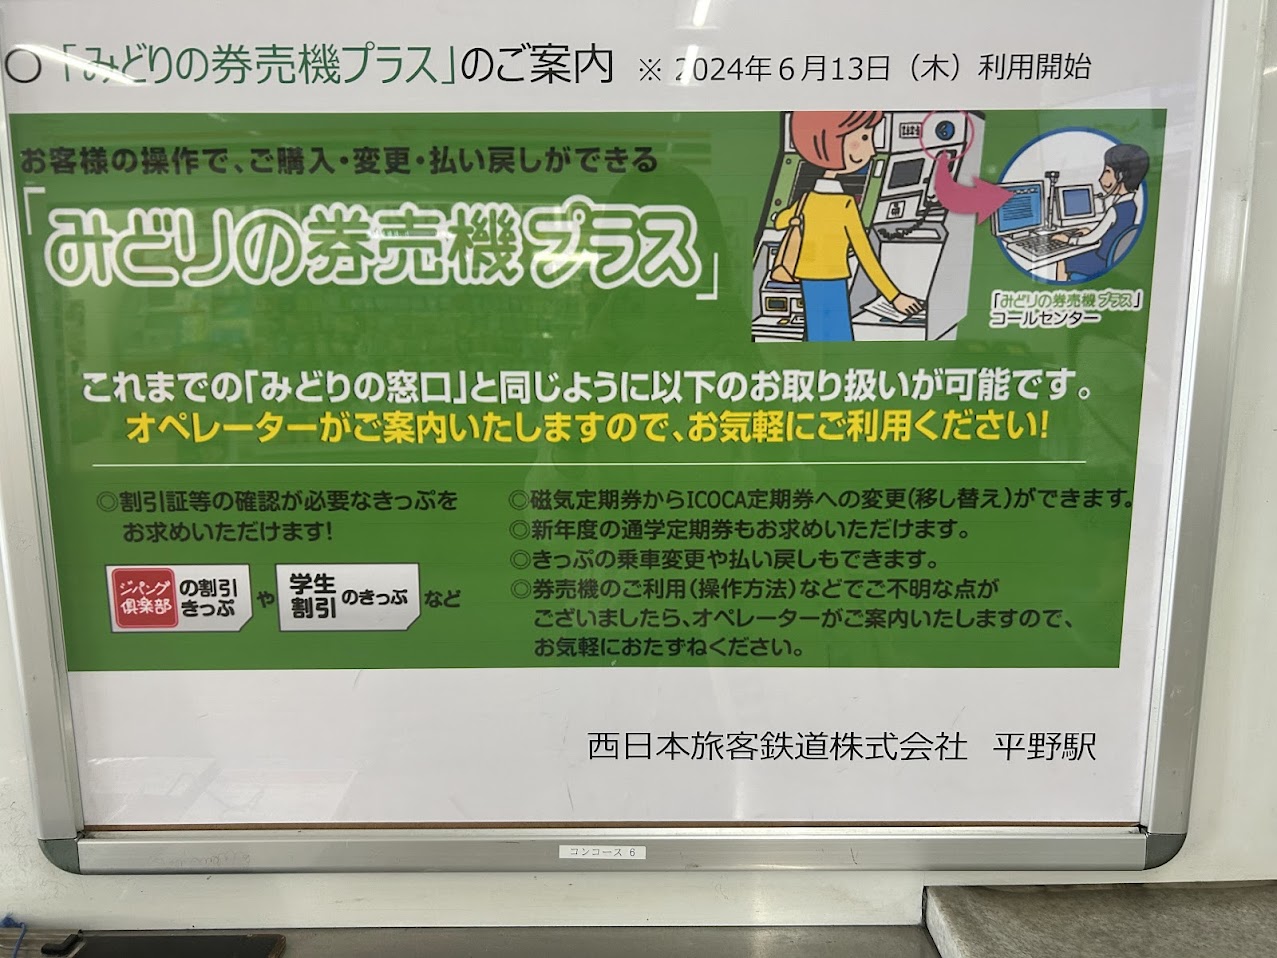 JR平野駅みどりの窓口営業終了のお知らせ3